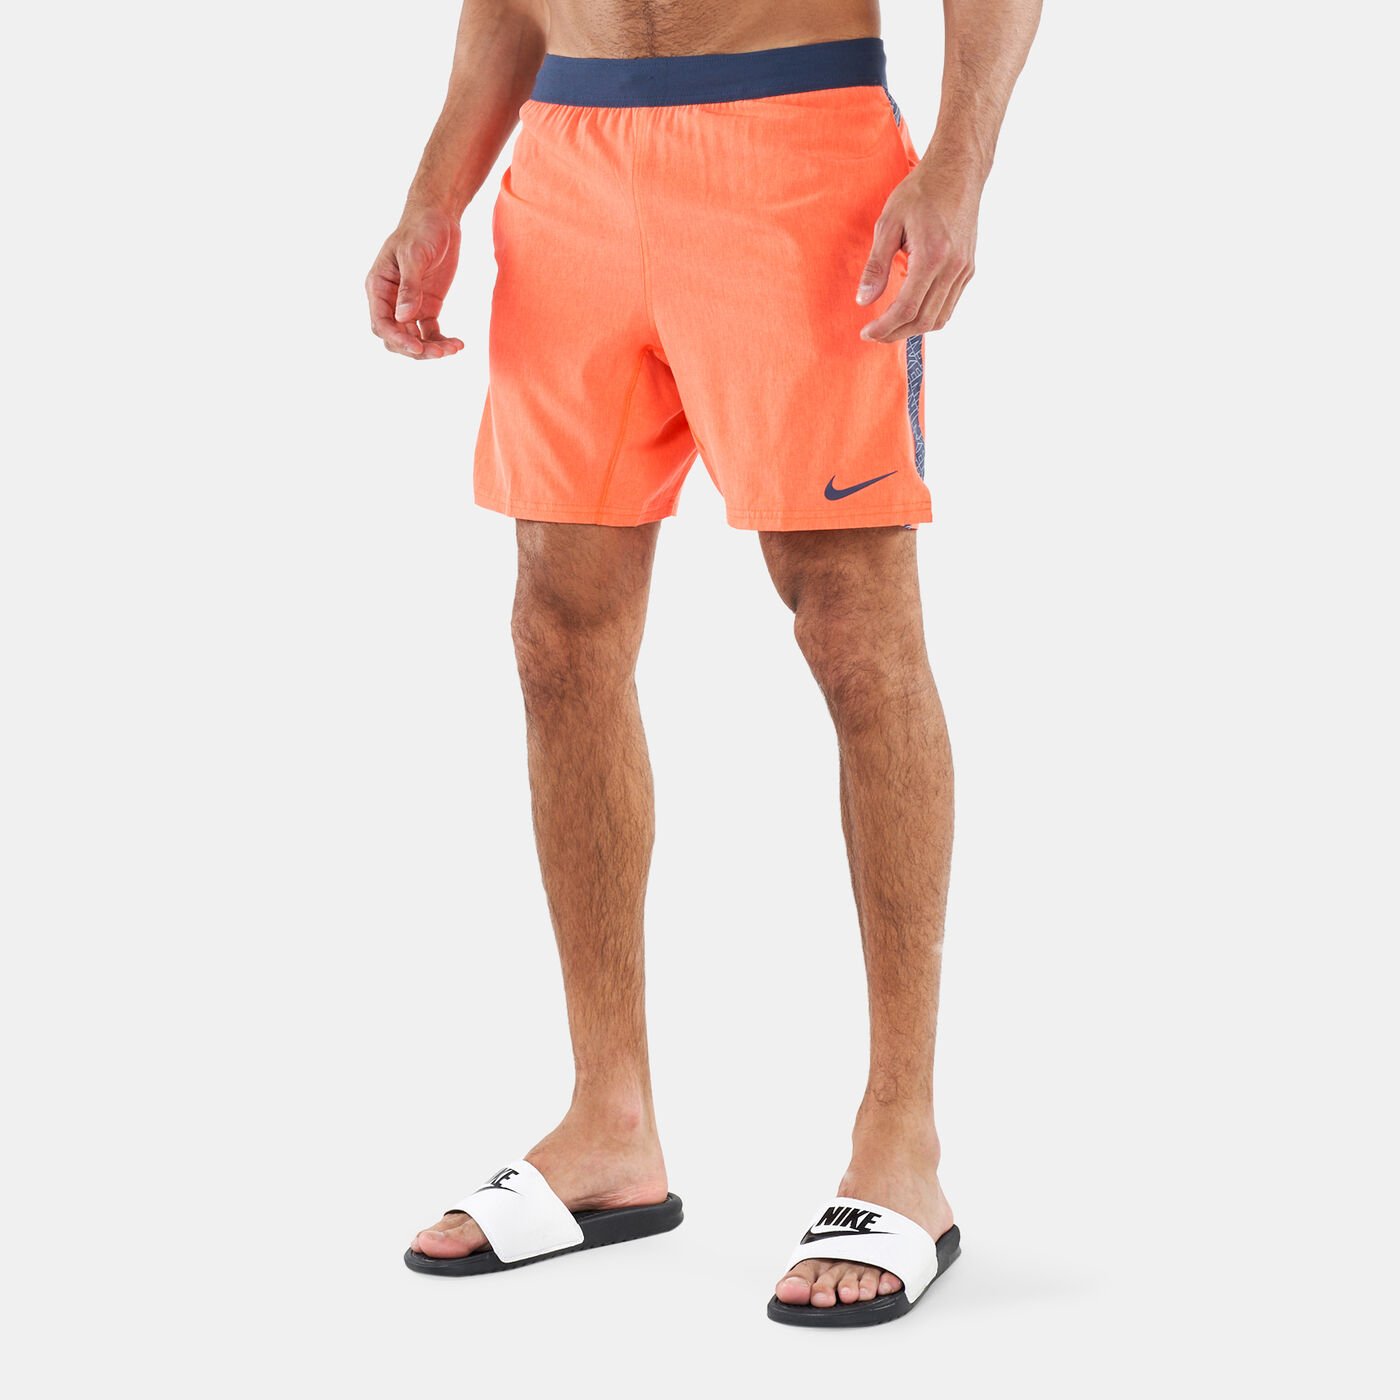 Men's 7-inch Volley Shorts